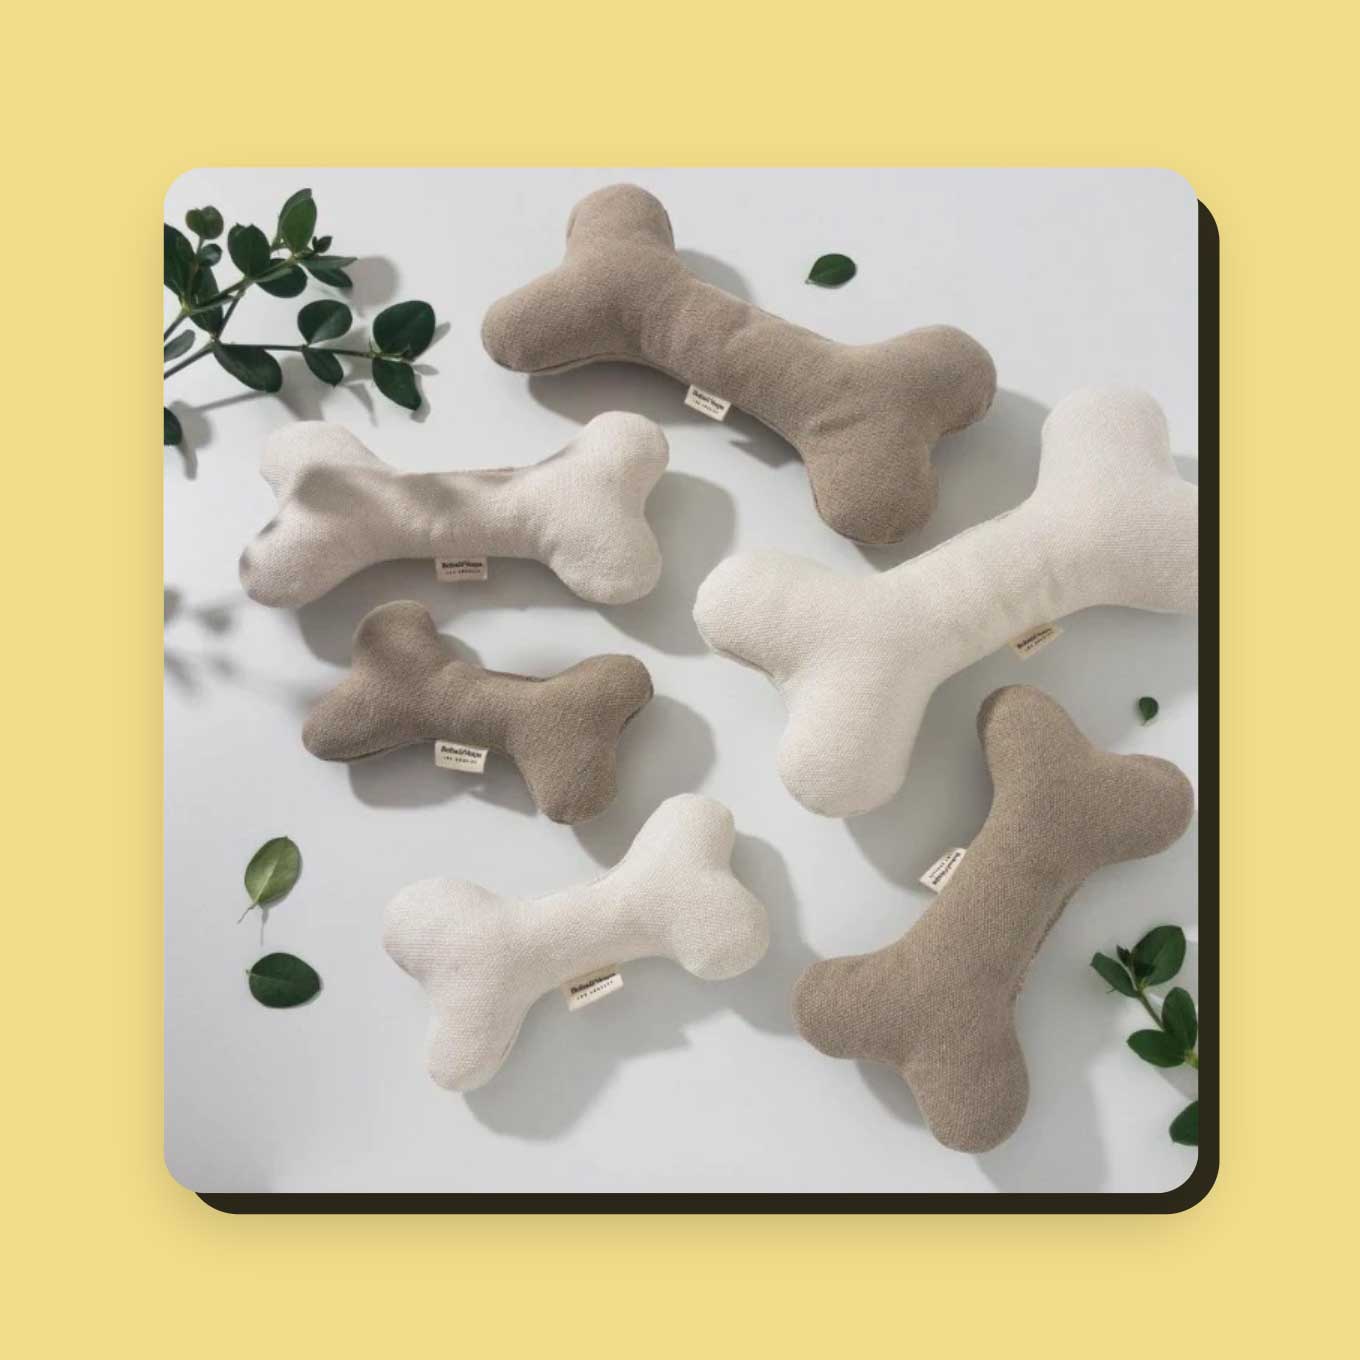 A variety of dog-bone shaped plush toys